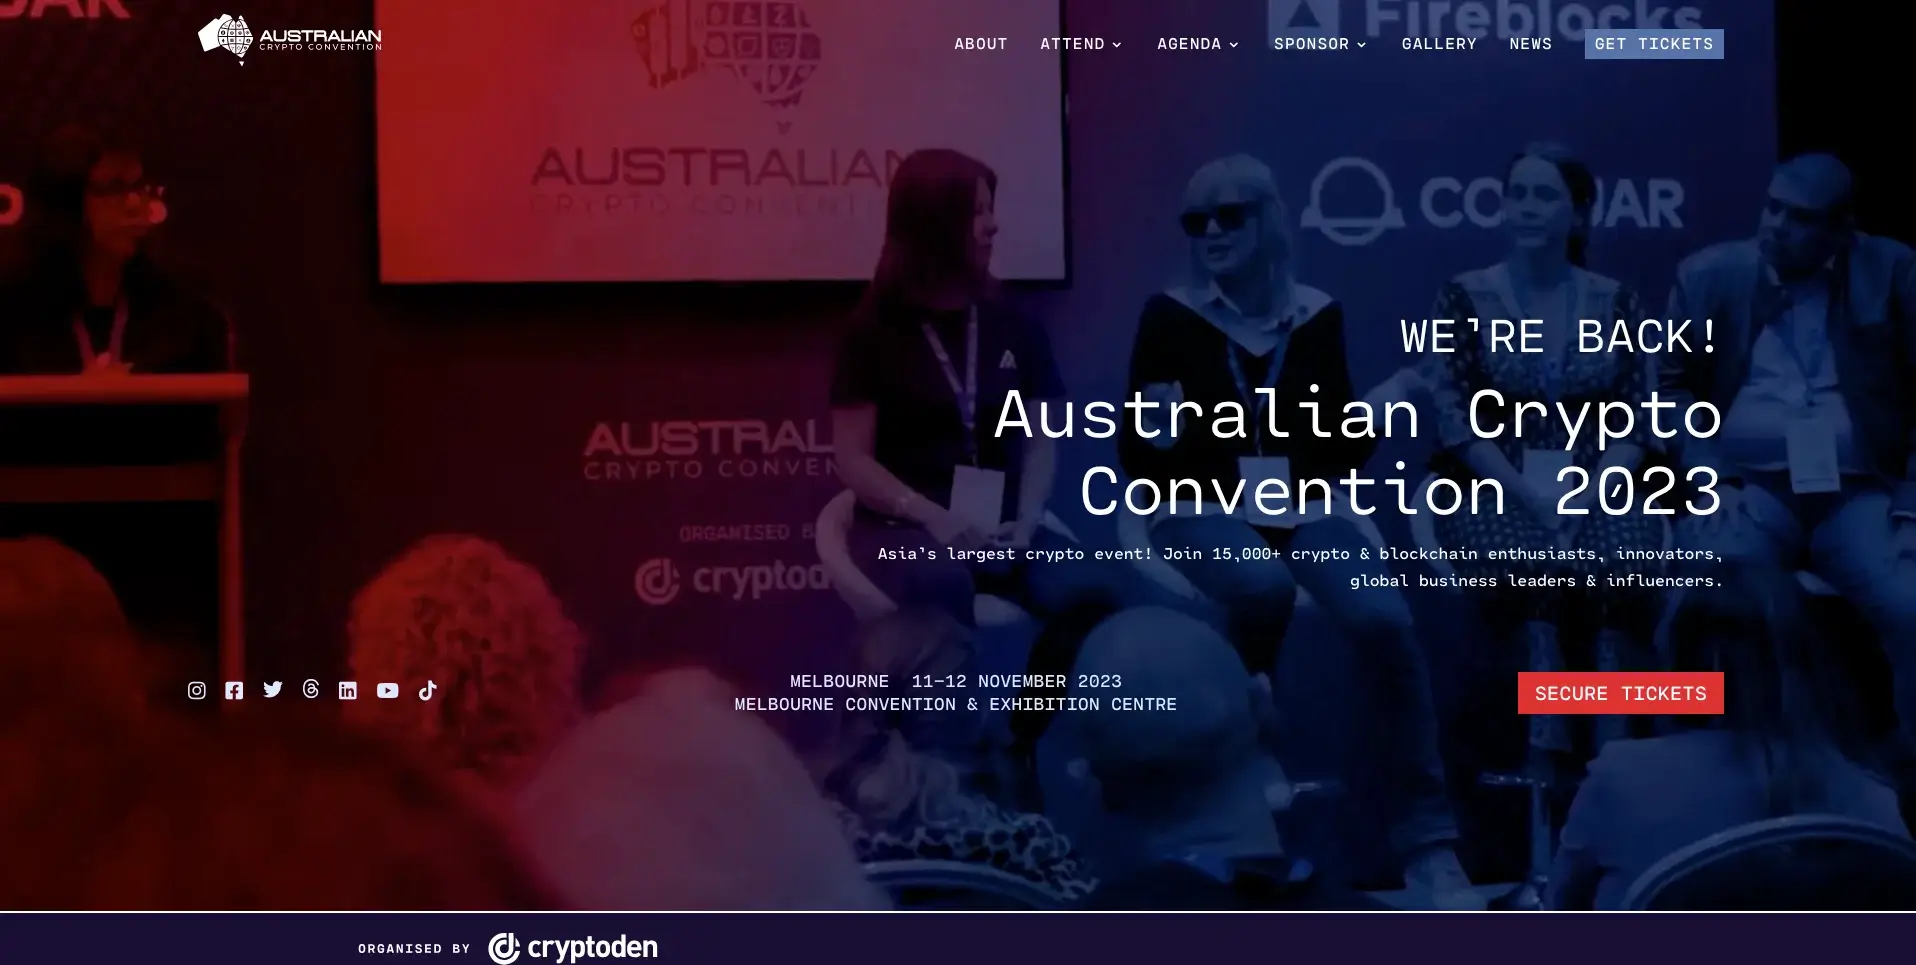 17. Australia Crypto Convention